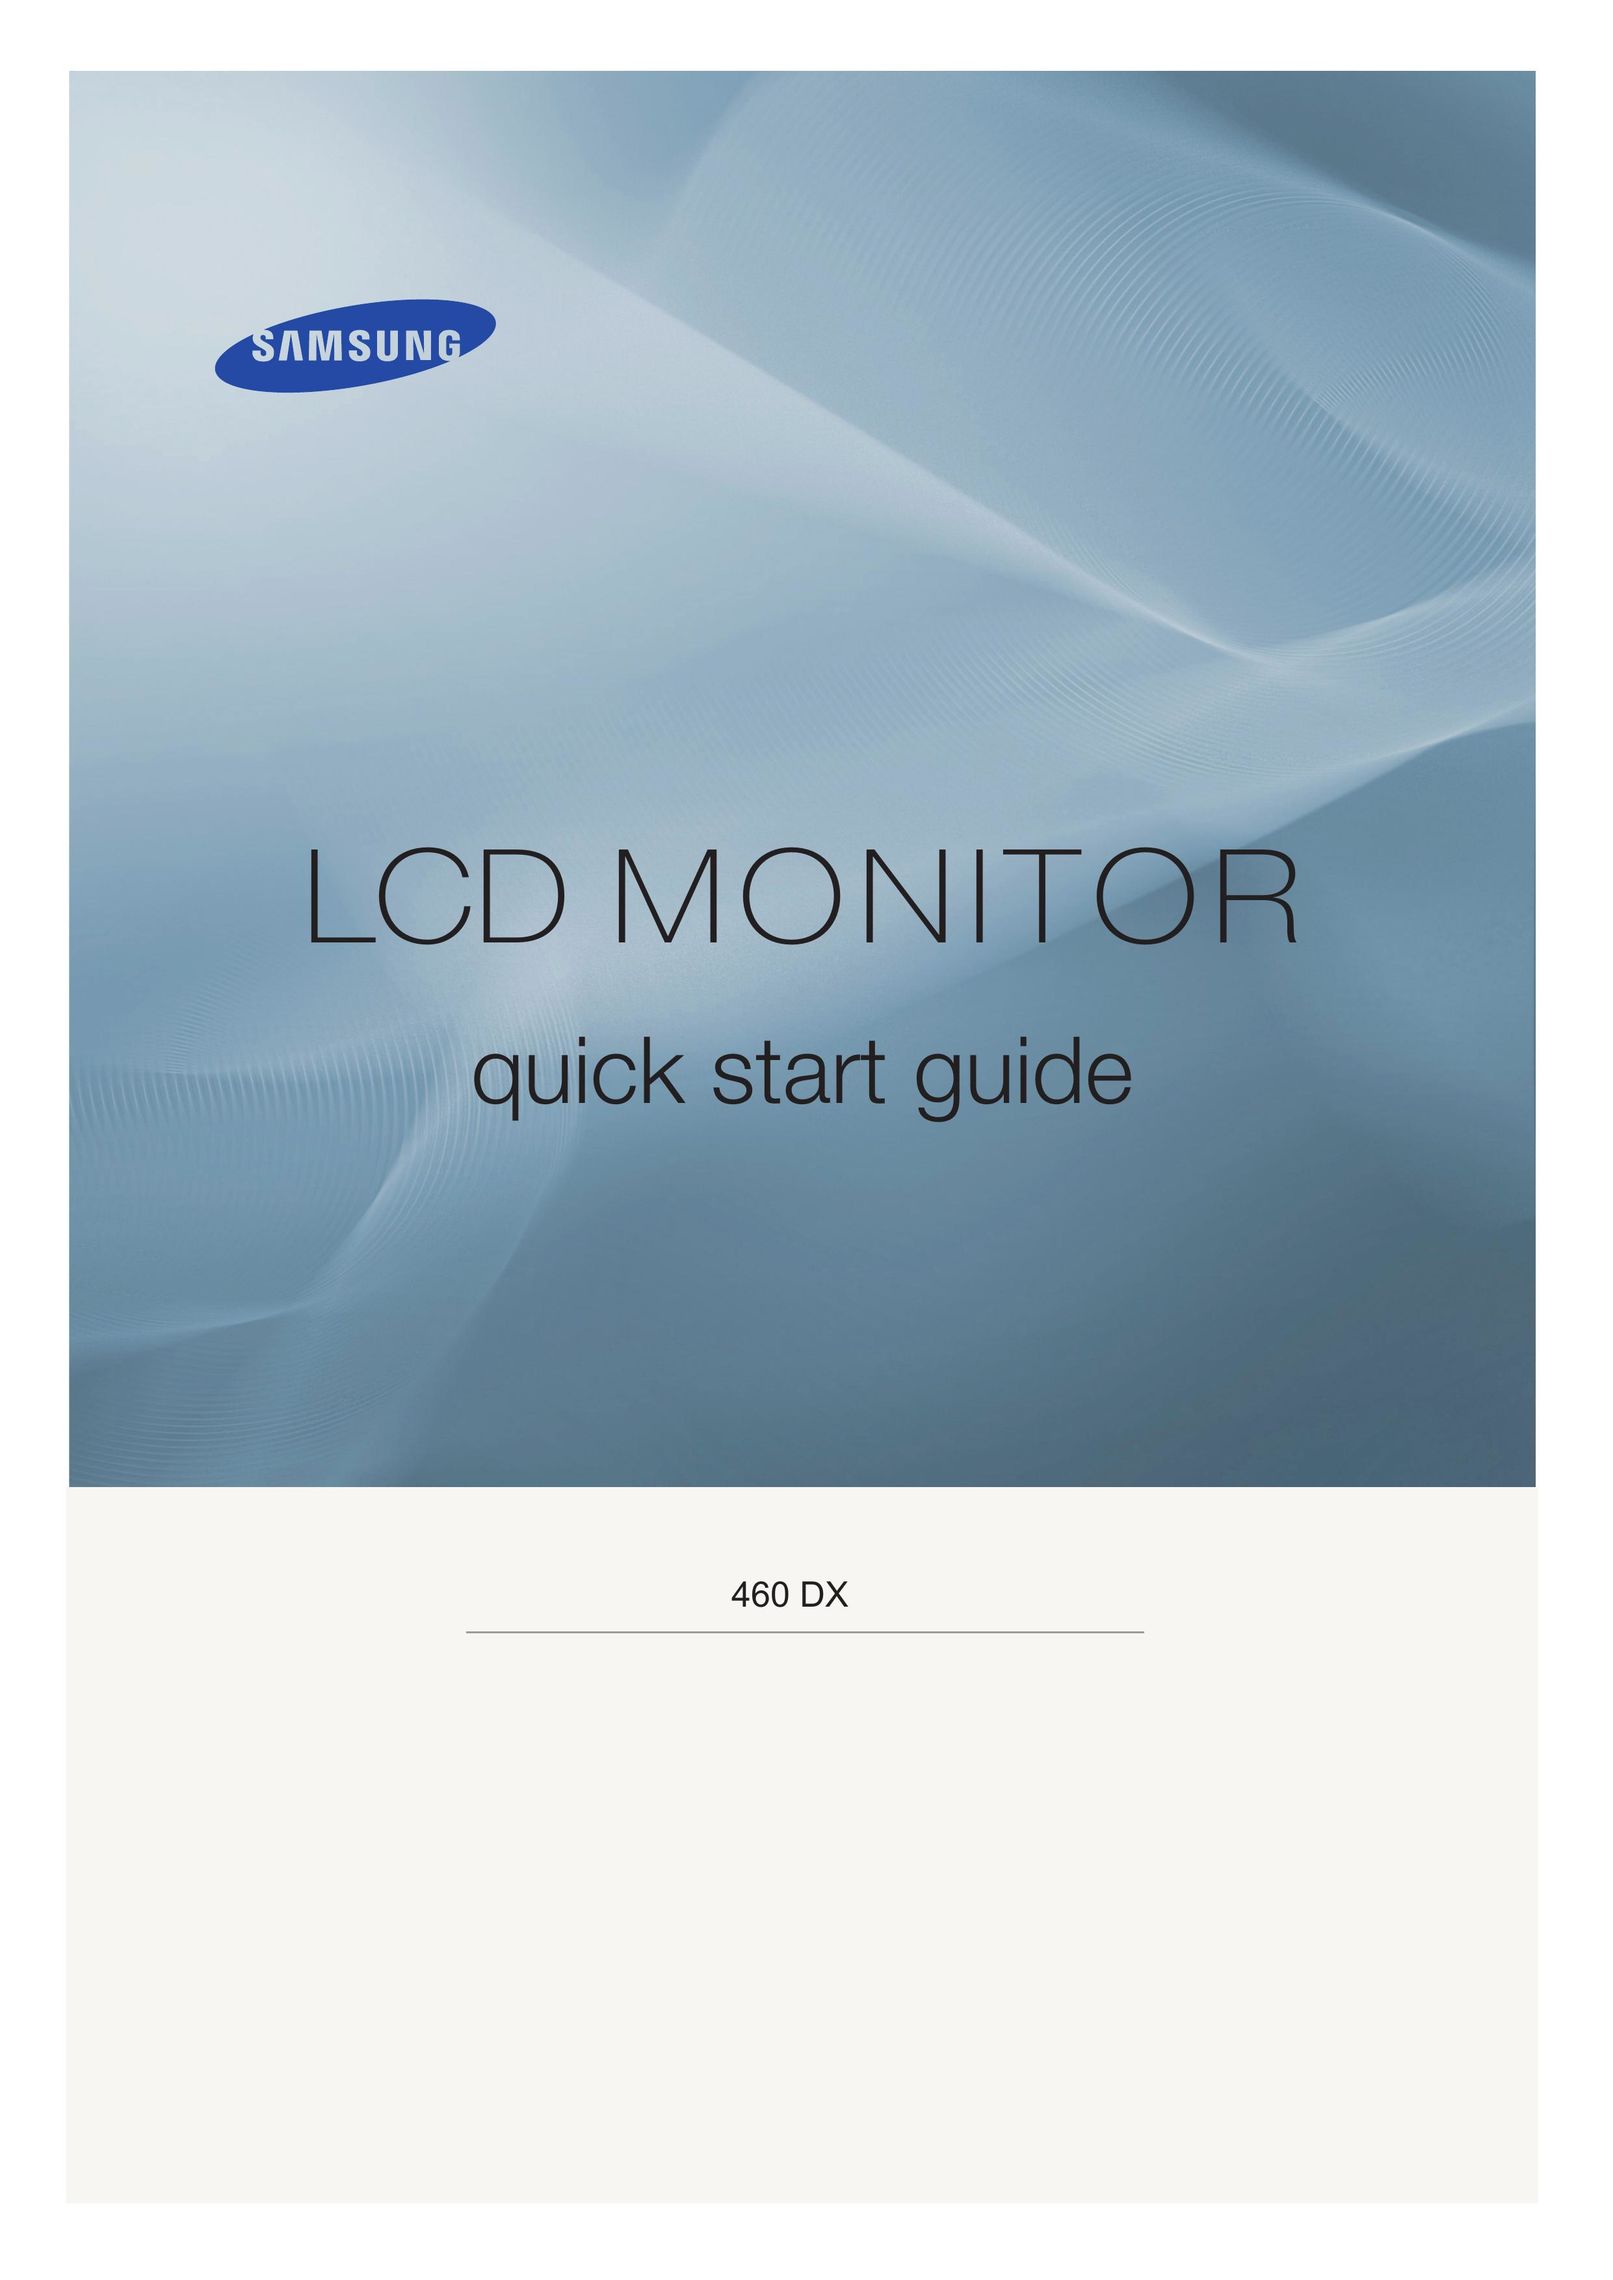 Samsung 460 DX DVR User Manual